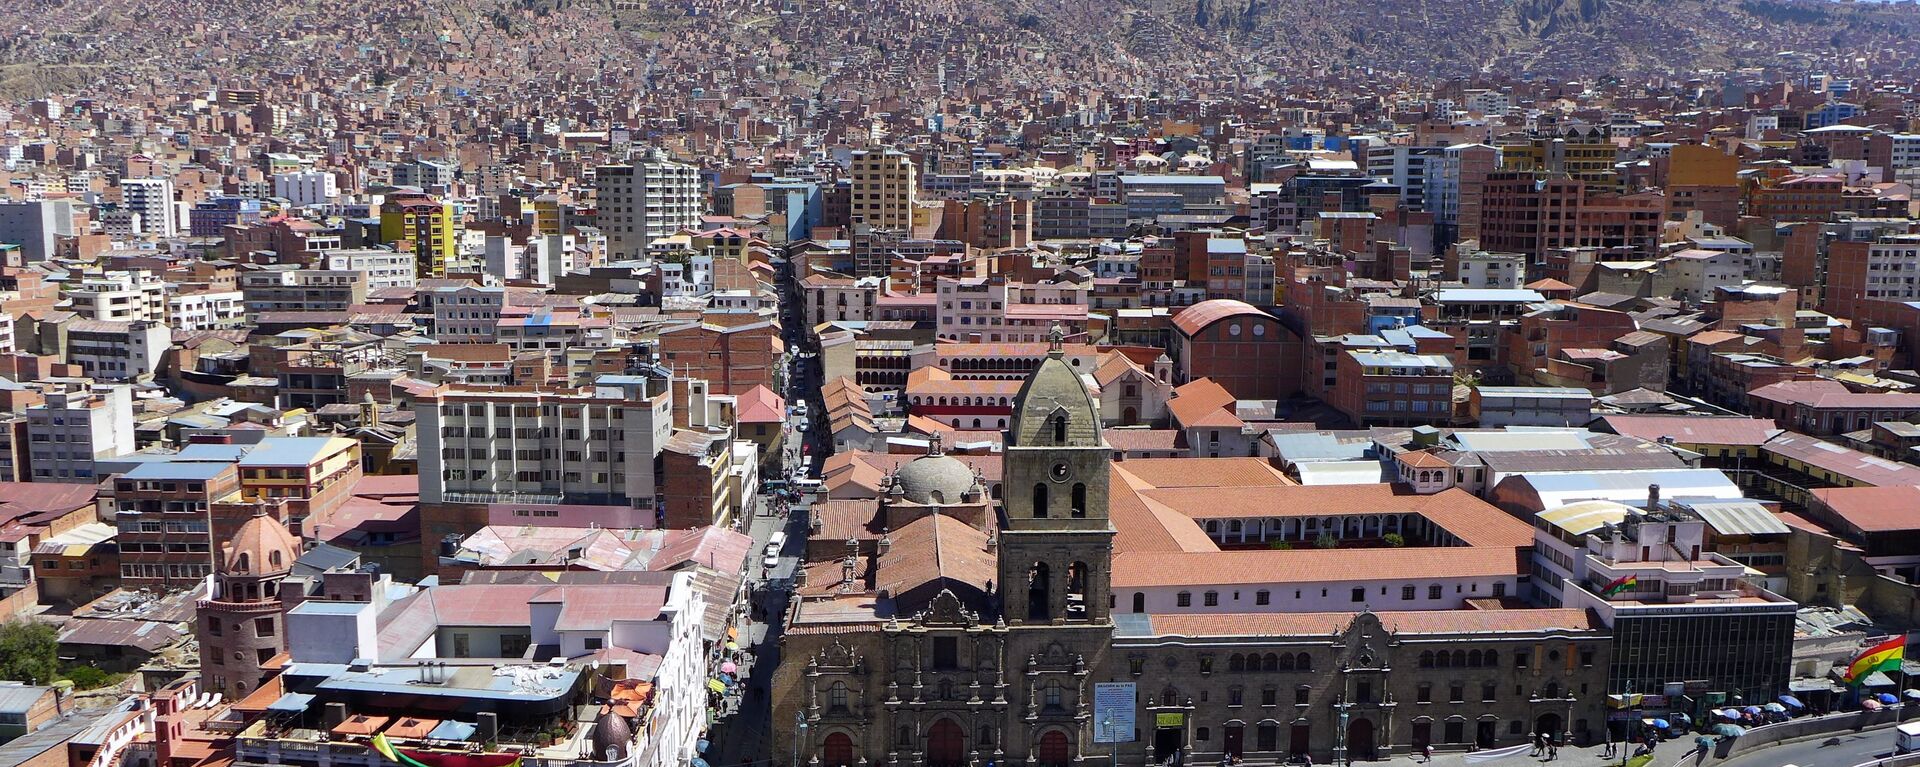 La Paz, la capital de Bolivia - Sputnik Mundo, 1920, 10.05.2021